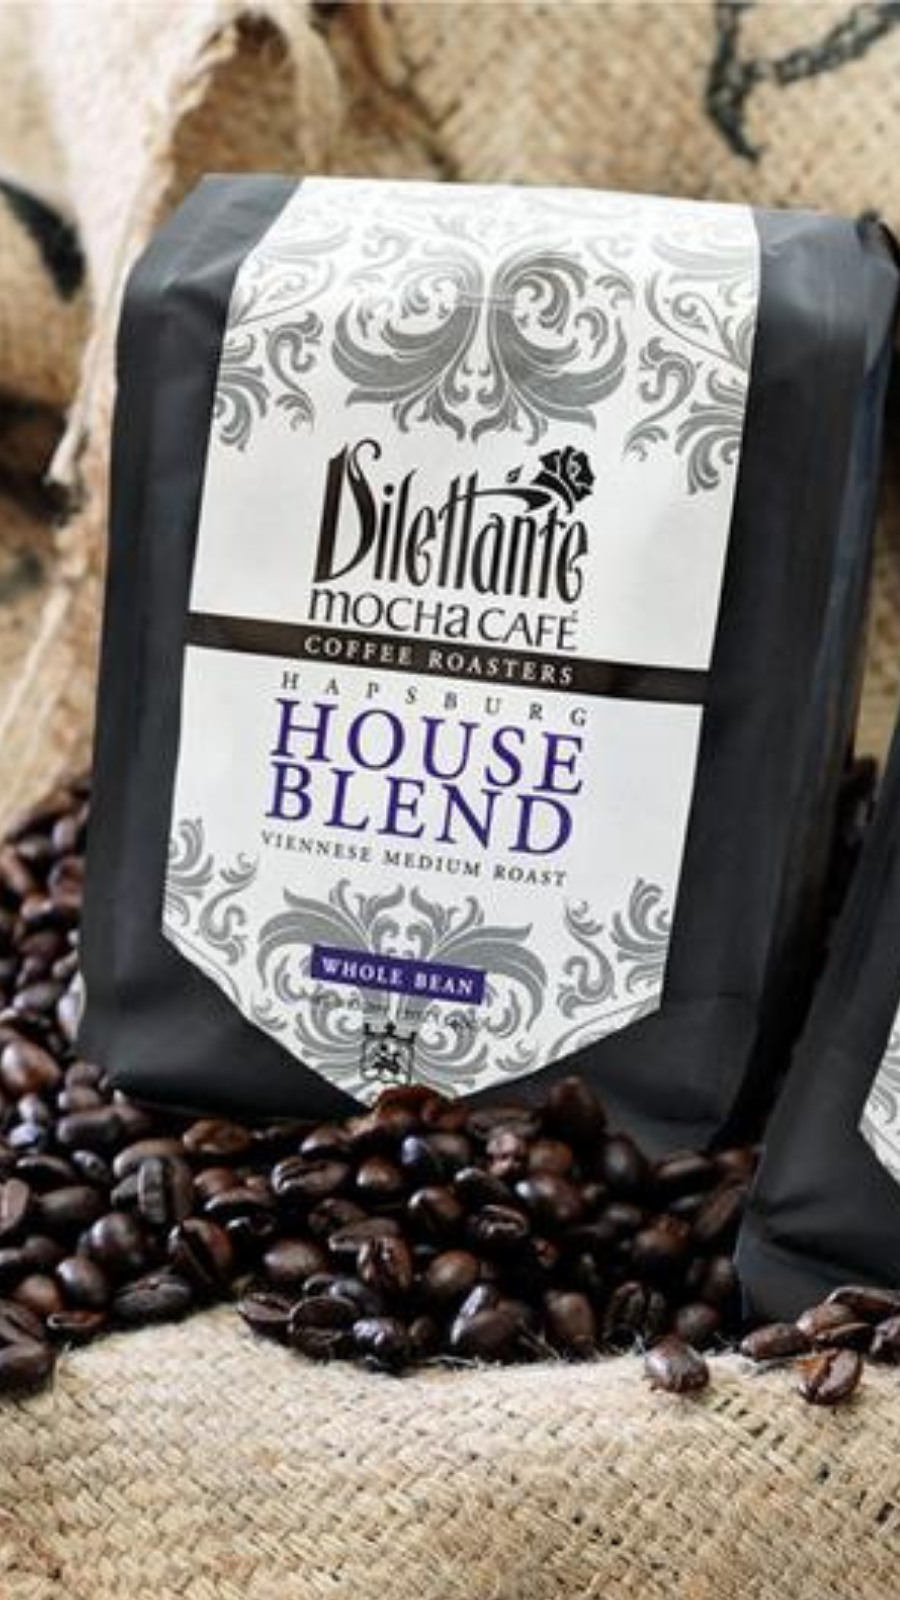 Dilettante Chocolates Hapsburg House Blend Espresso Beans, used in each of Dilettante's mocha café locations